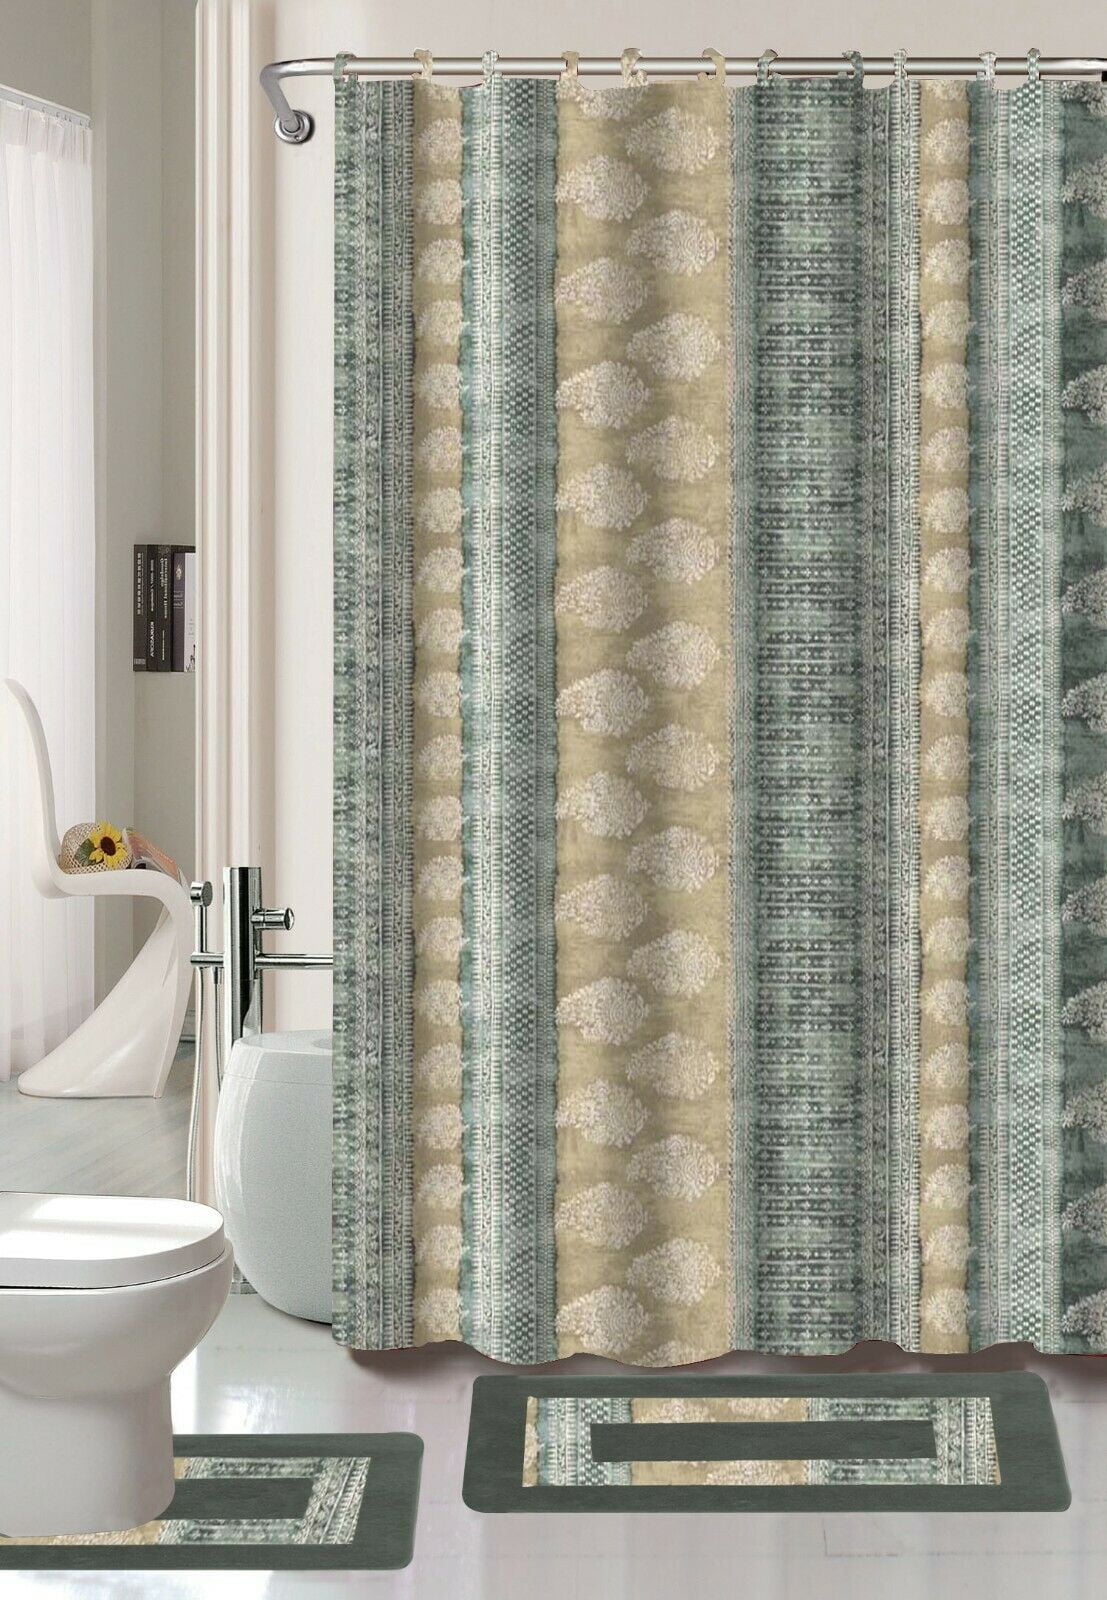 Dream Mushroom Theme Waterproof Fabric Home Decor Shower Curtain Bathroom Mat 